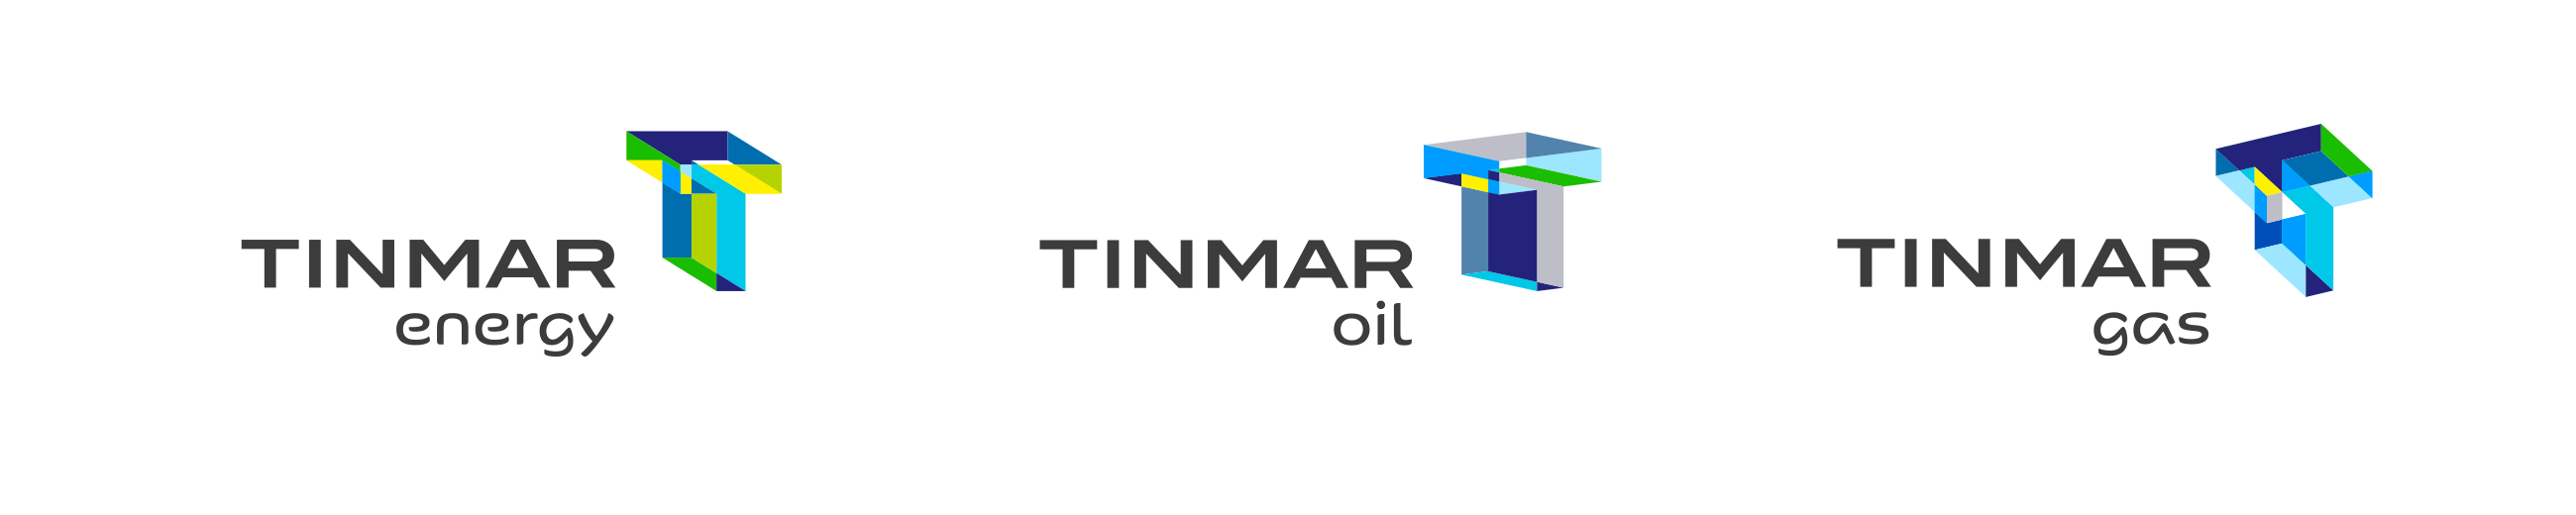 Tinmar-Rebranding-by-Ciprian-Badalan-subsidiaries